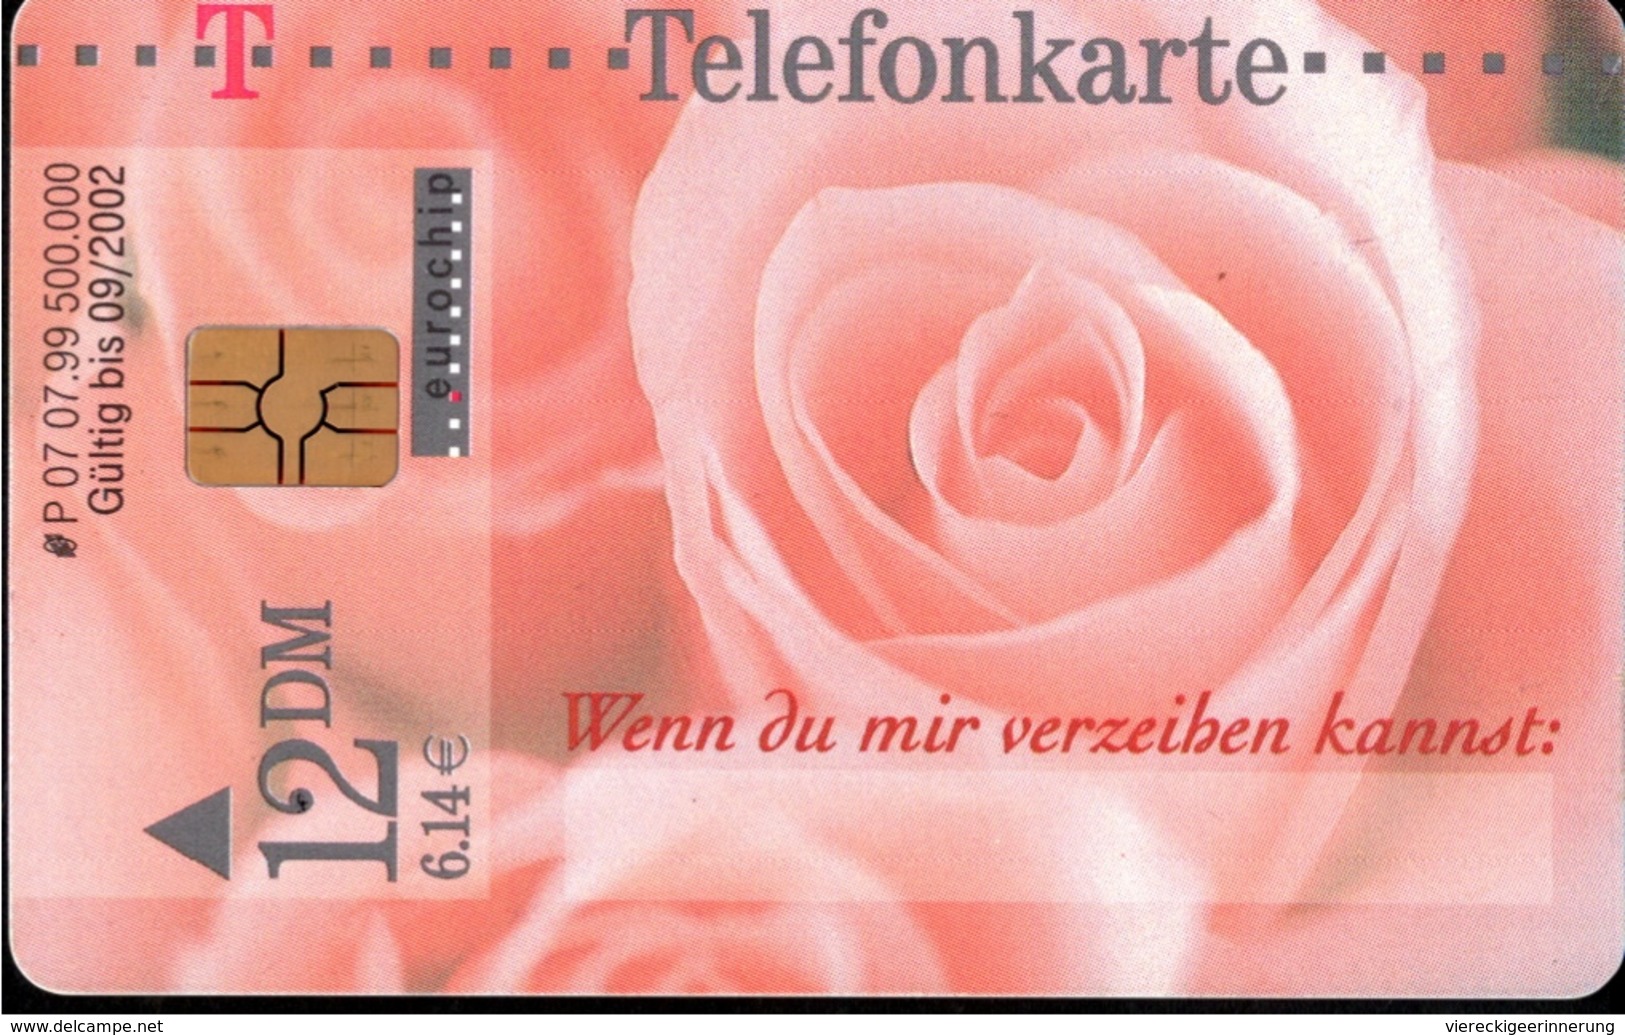 ! Telefonkarte, Telecarte, Phonecard, 1999, P07, Auflage 500000, Telekom Rose, Sorry, Germany - P & PD-Series: Schalterkarten Der Dt. Telekom